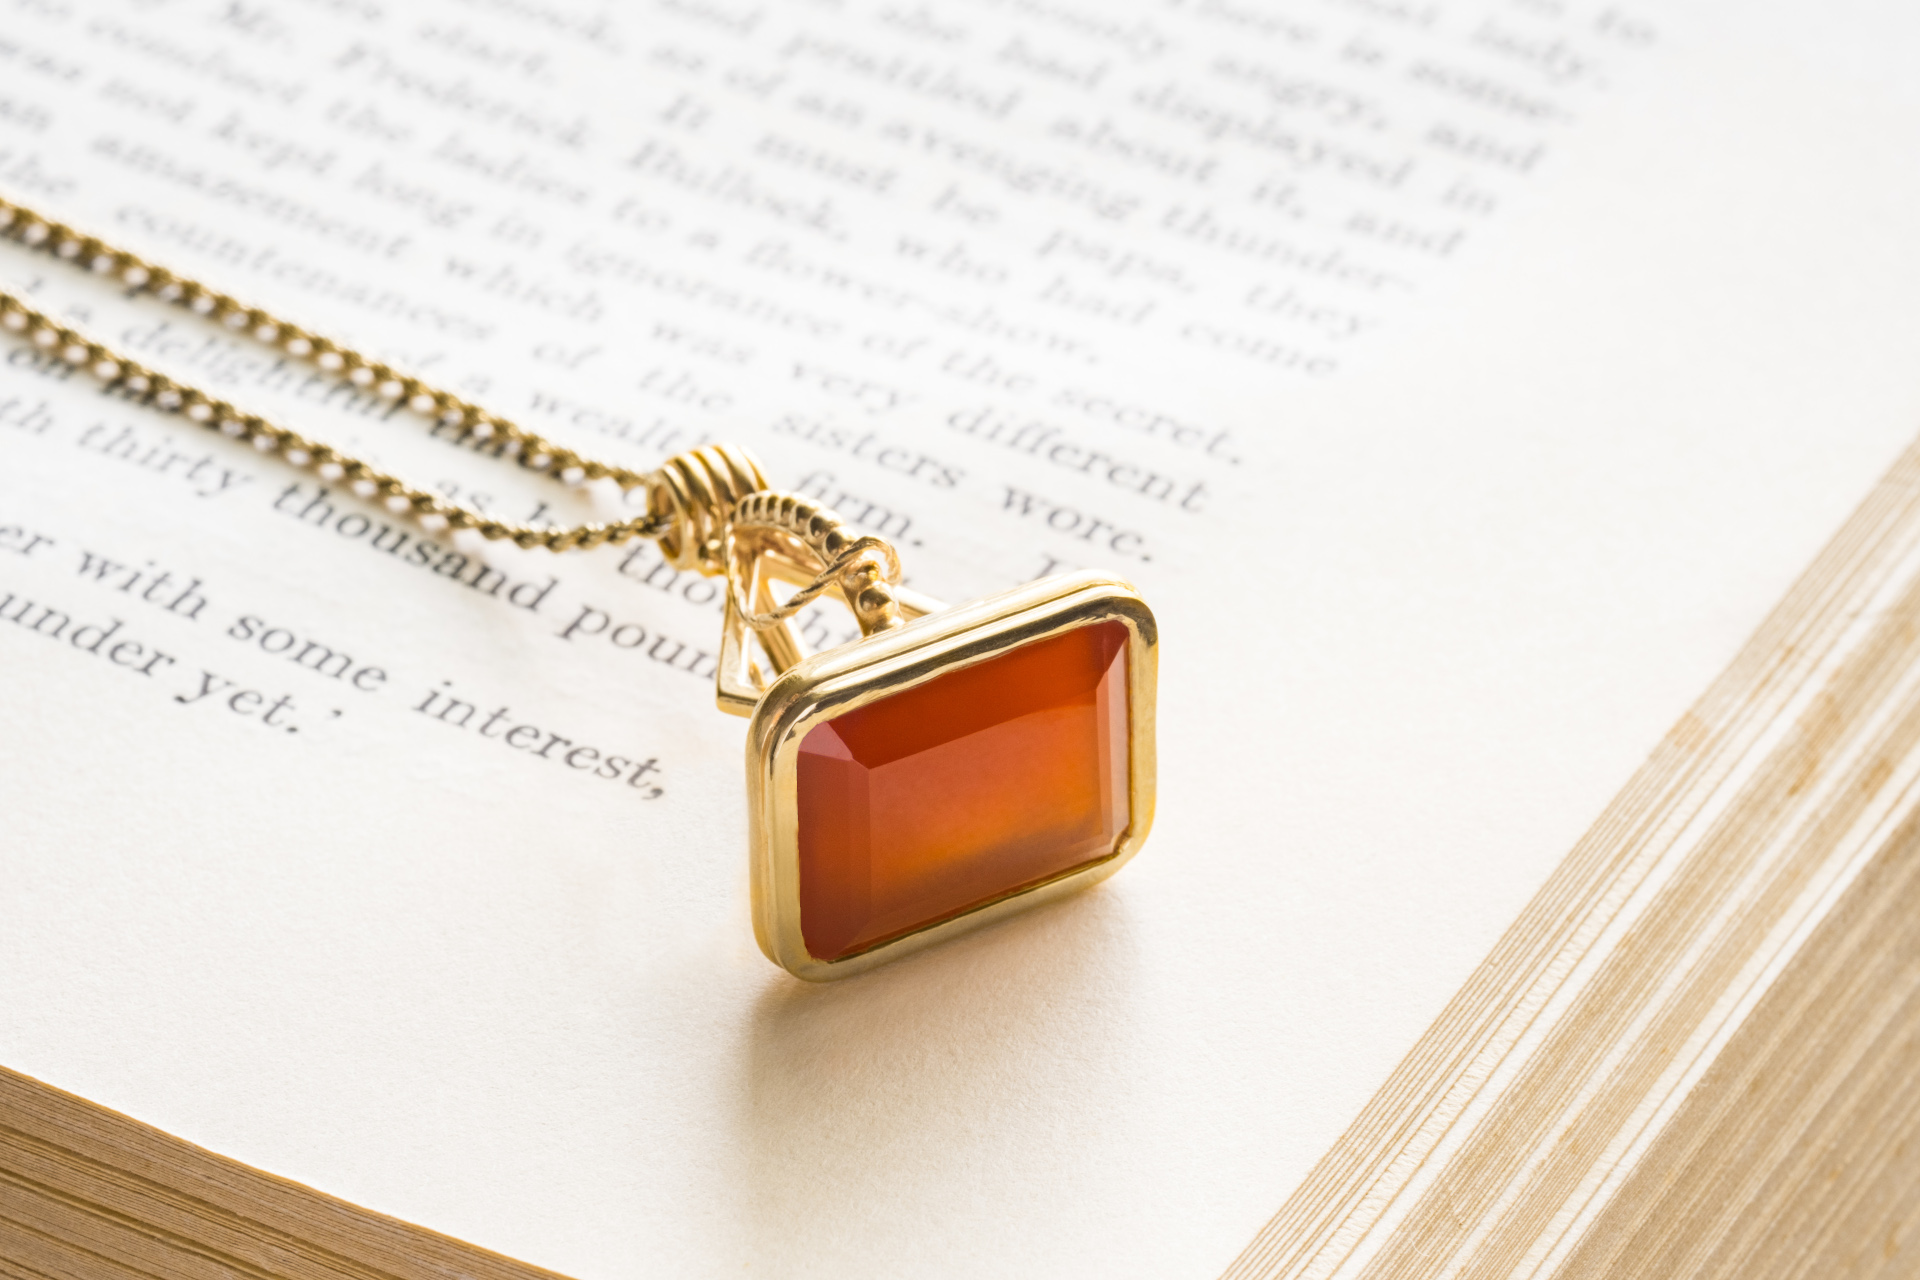 Orange gem necklace laid on open book